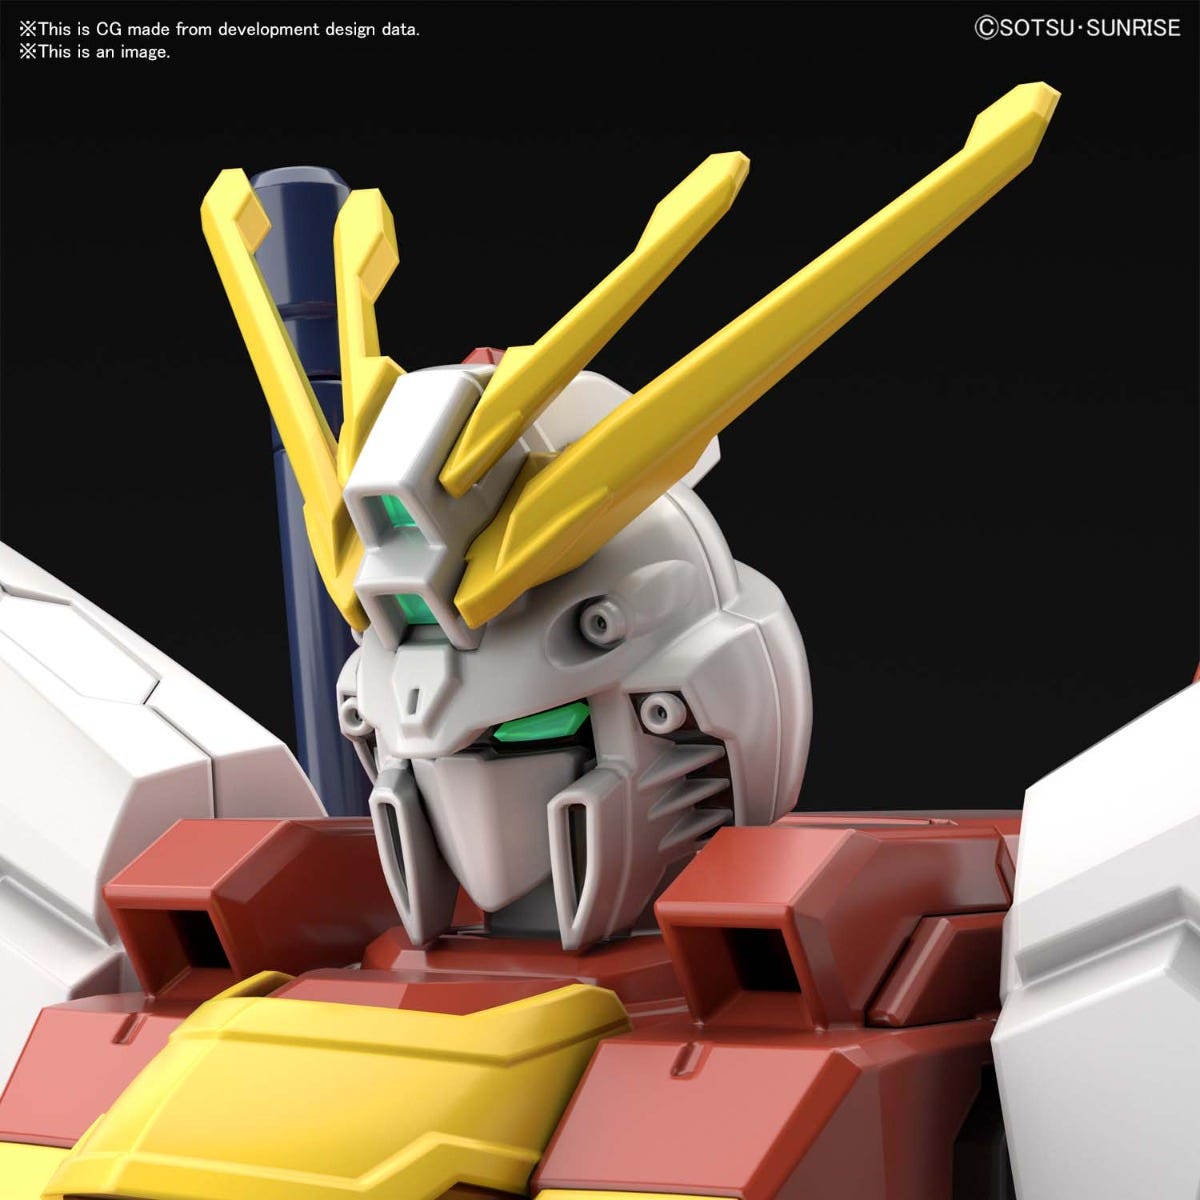 HG Blazing Gundam "Gundam Breaker Battlogue"